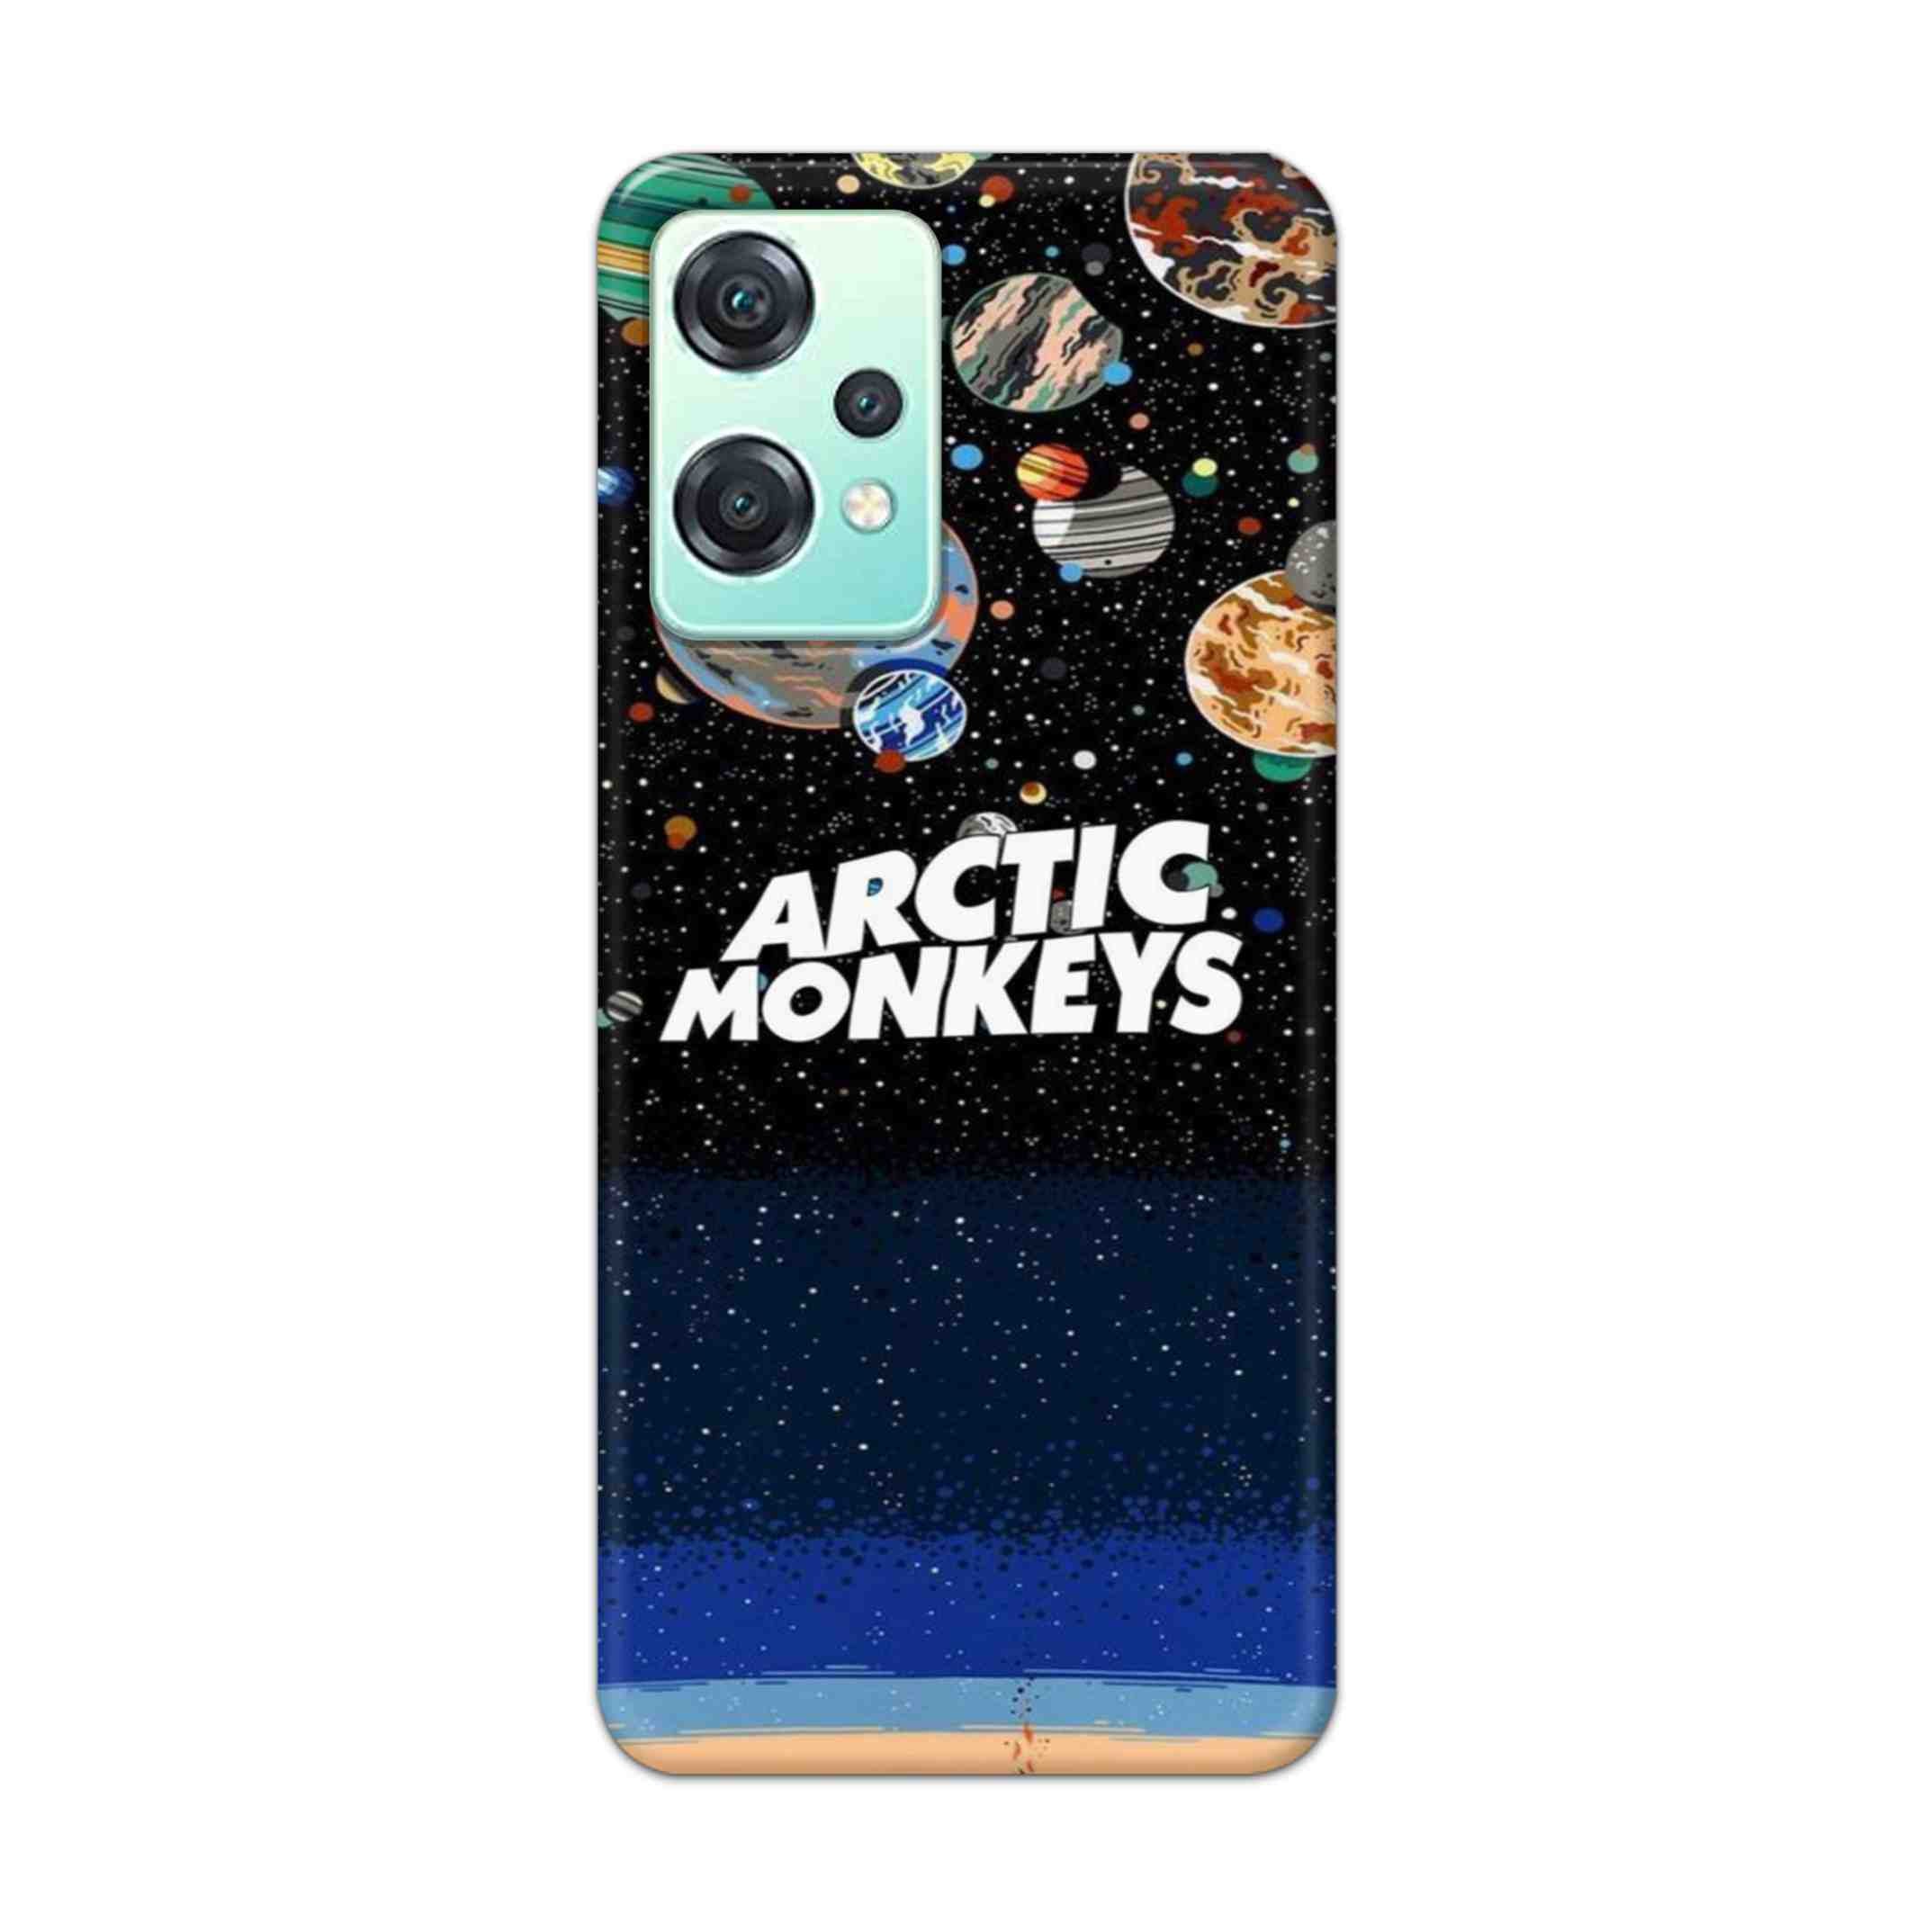 Buy Artic Monkeys Hard Back Mobile Phone Case Cover For OnePlus Nord CE 2 Lite 5G Online